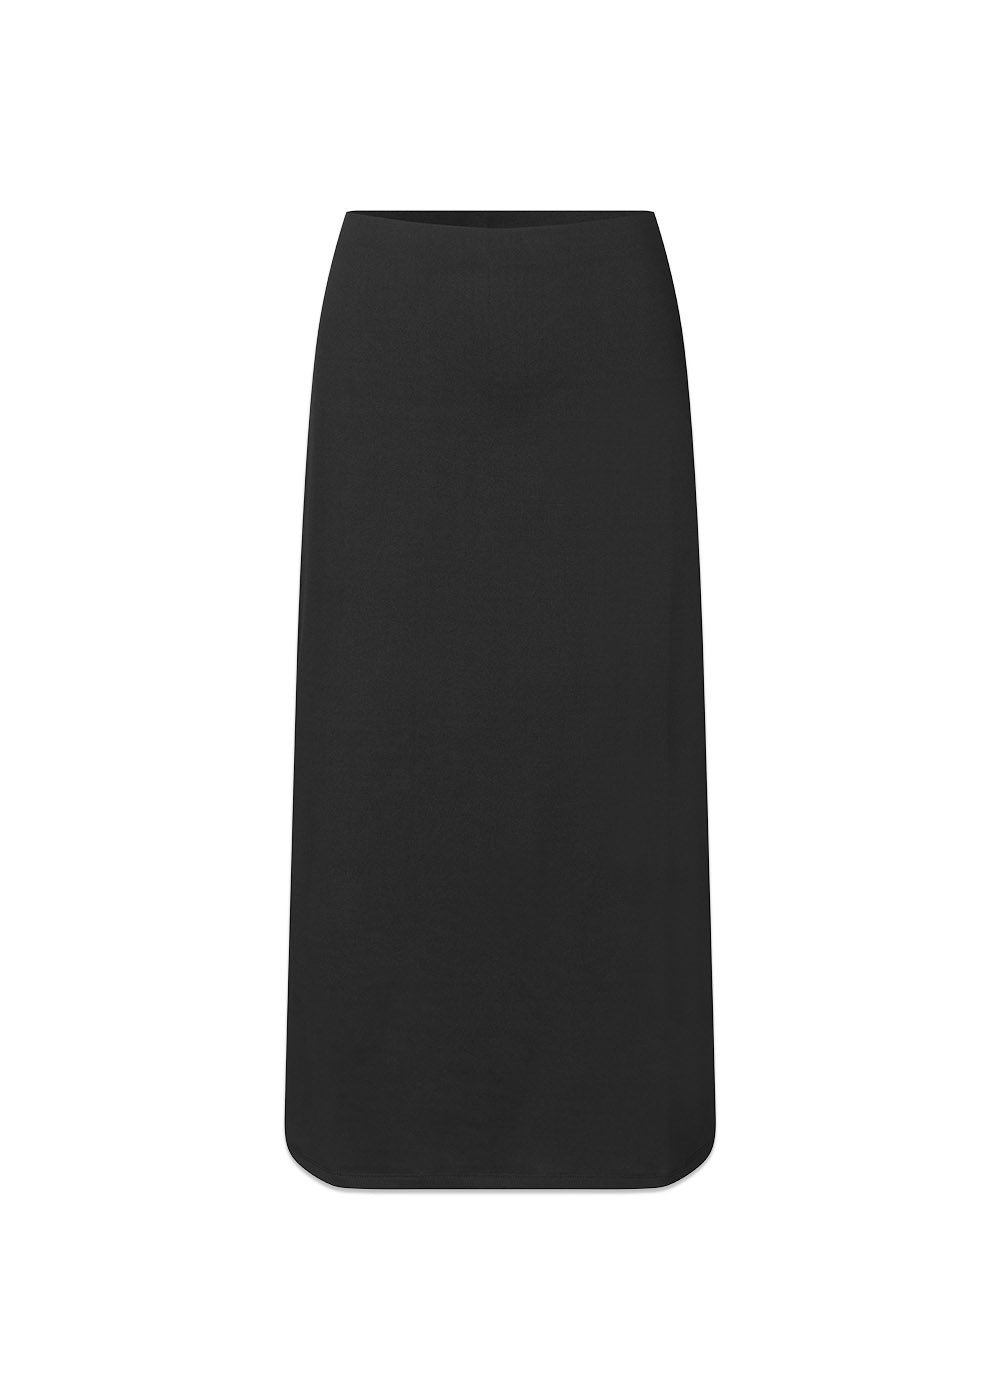 ImaMD skirt - Black